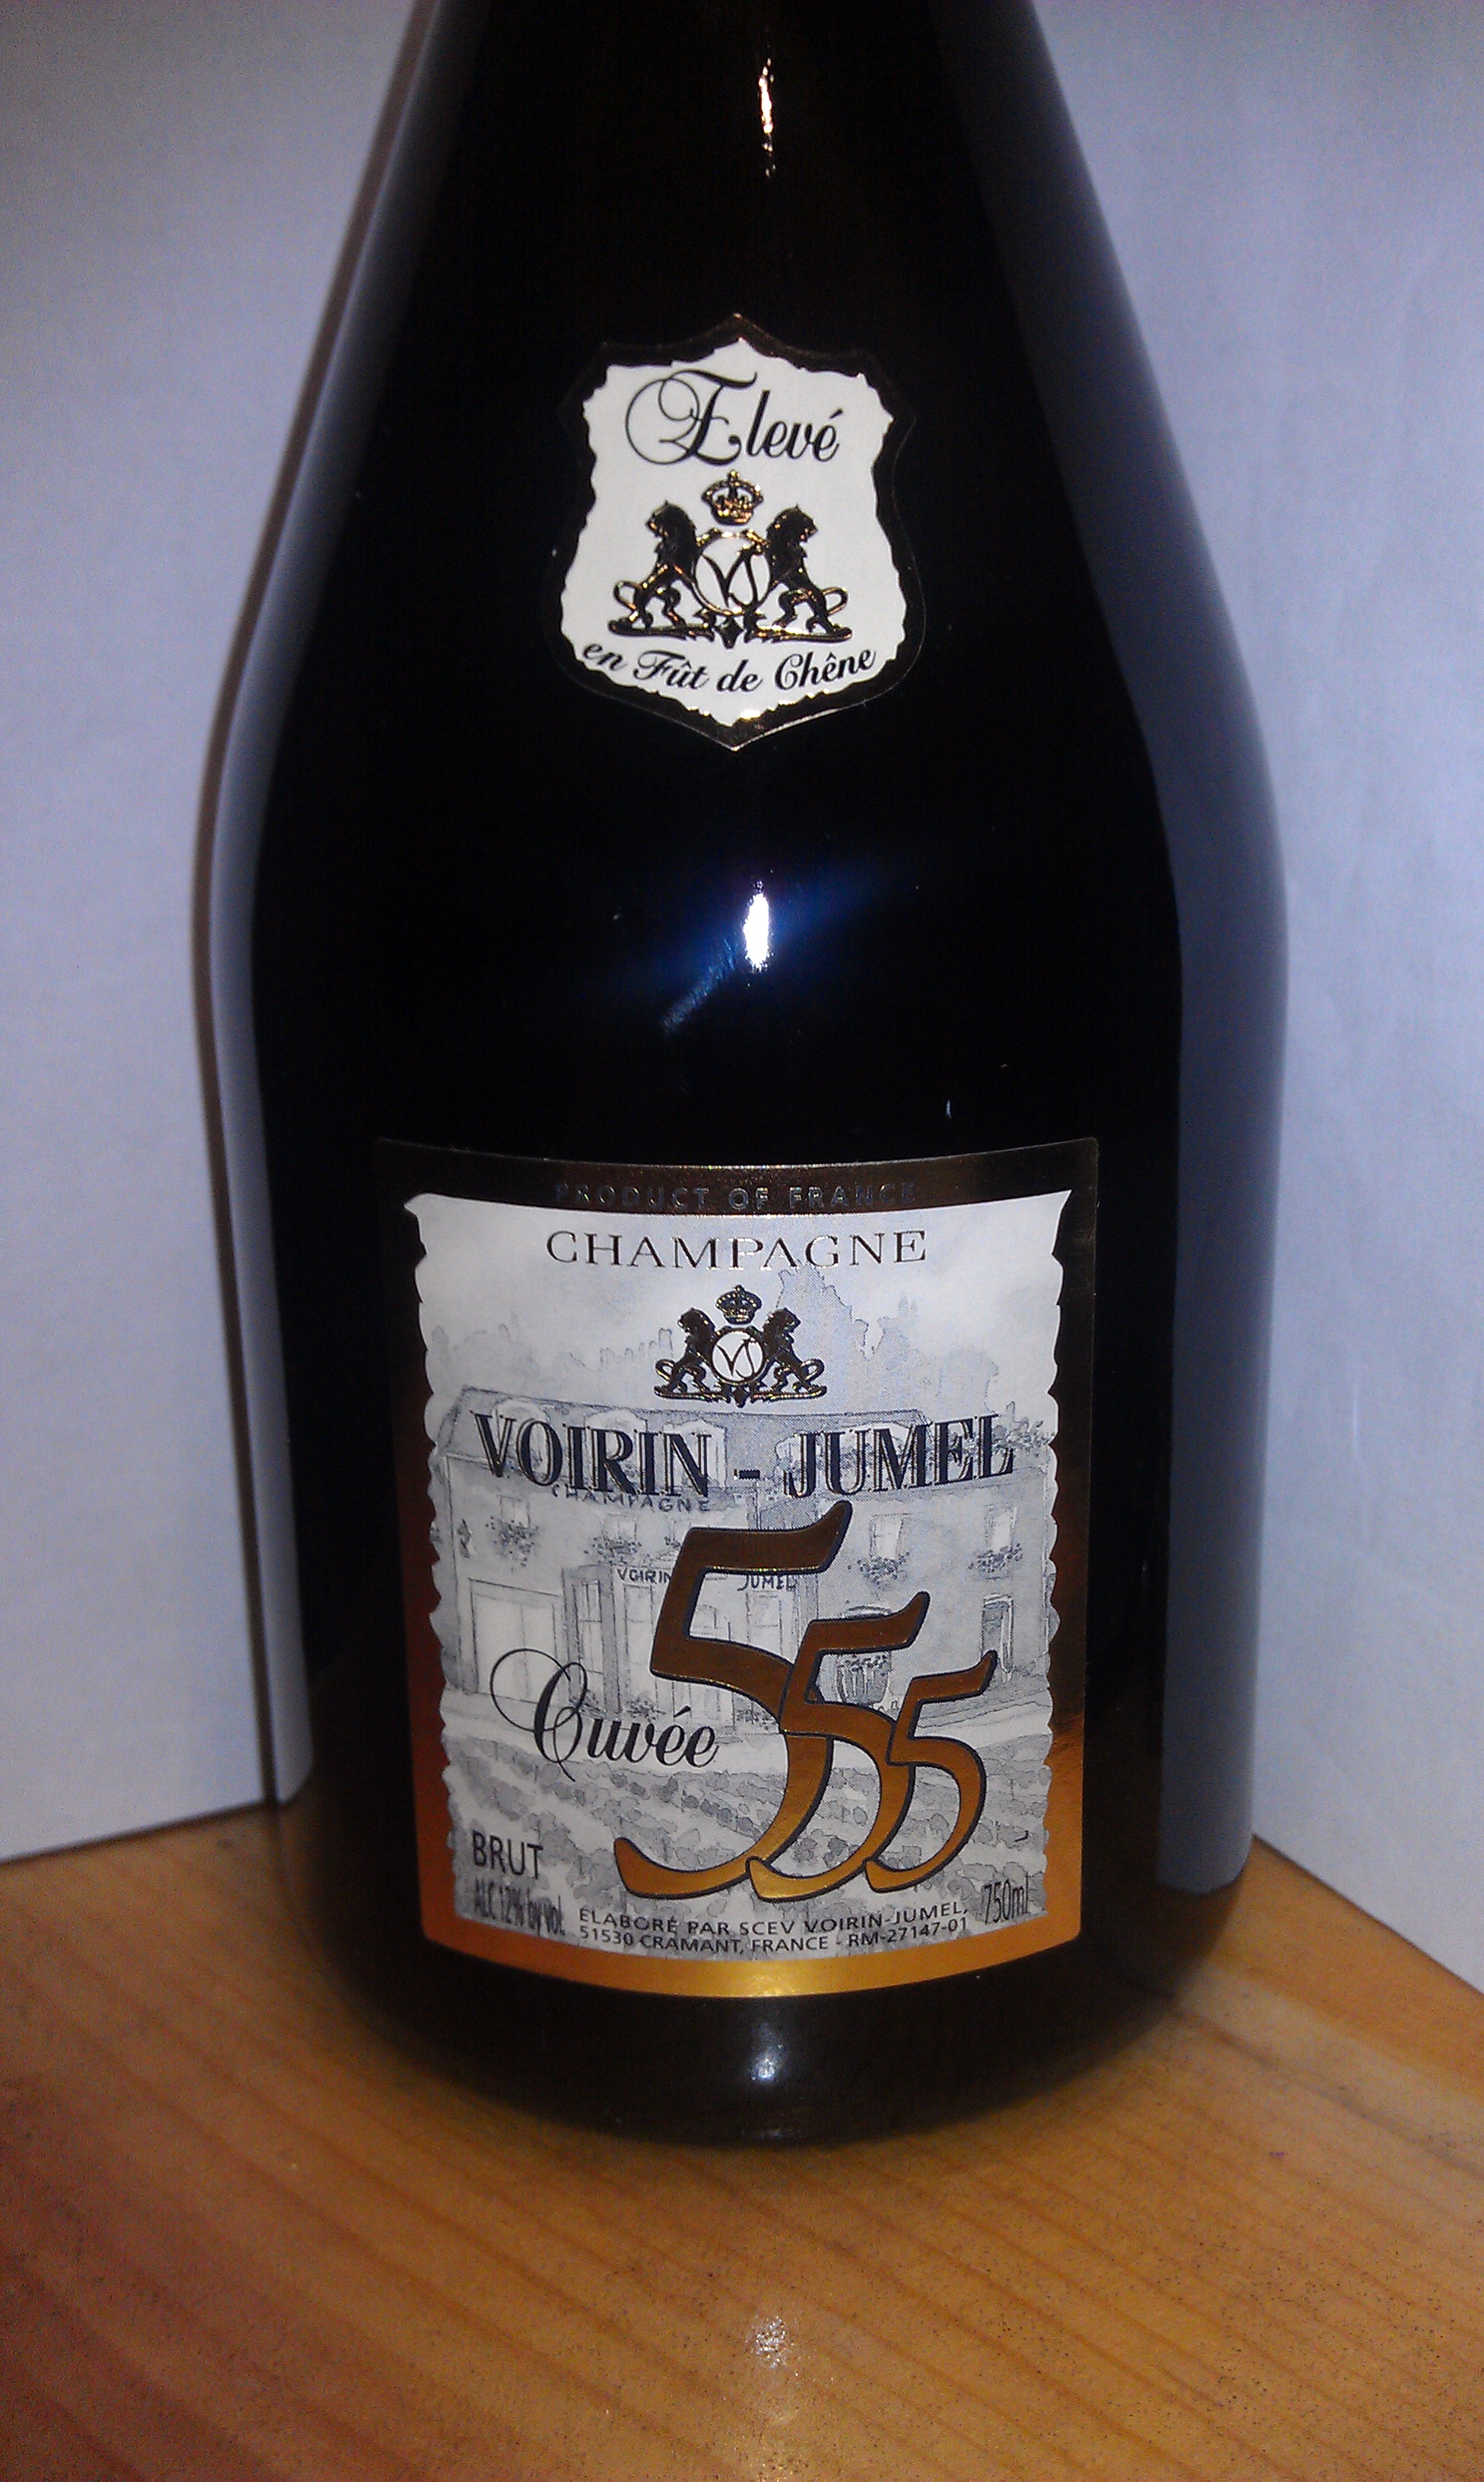 NV Voirin Jumel Cuvée 555 Cramant Champagne - click image for full description